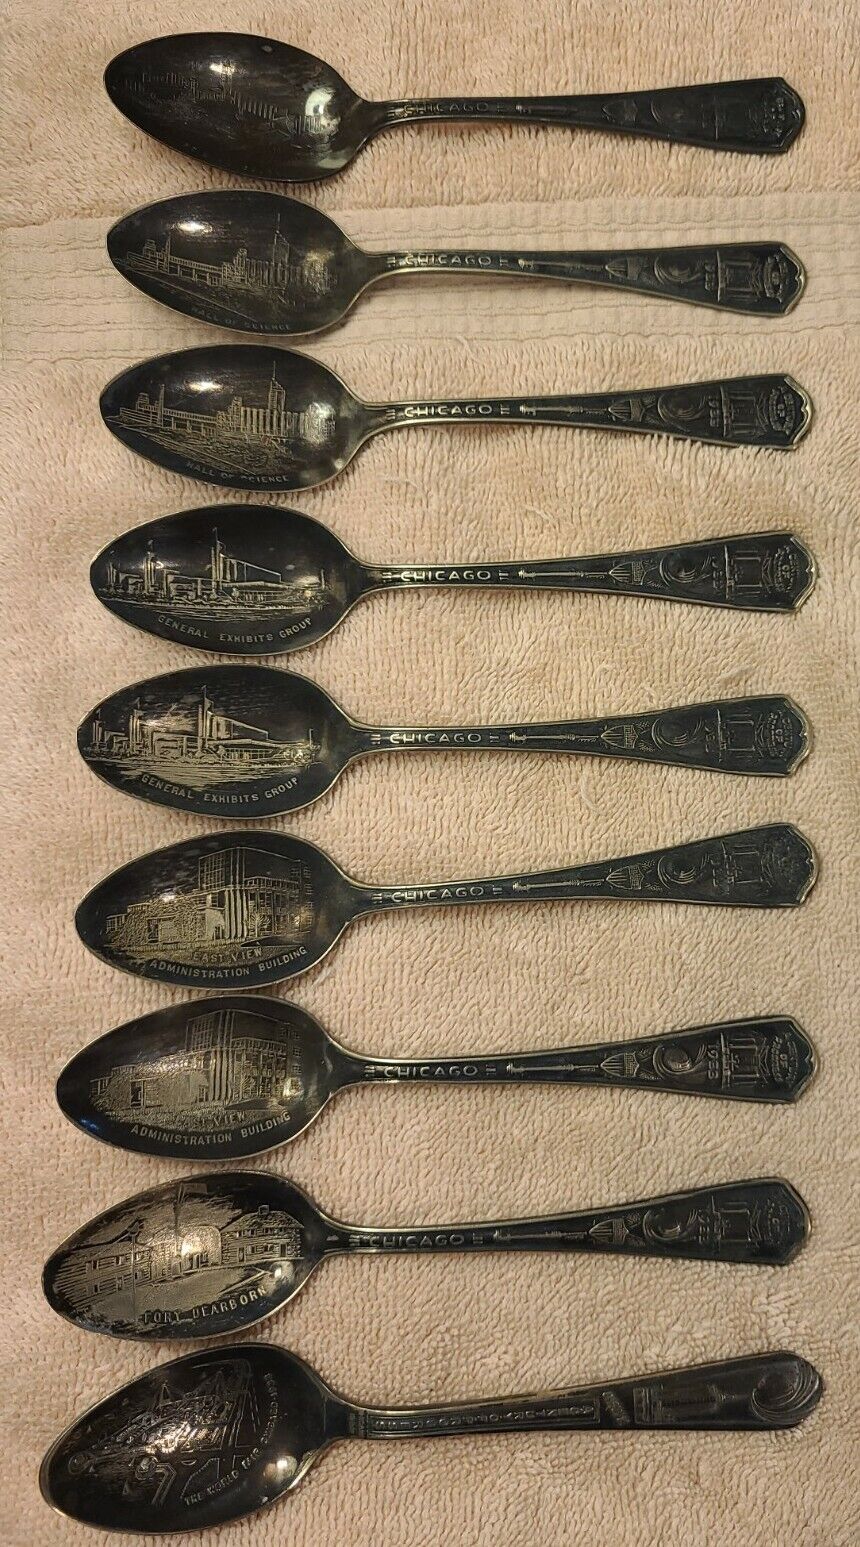 1933 Chicago World's Fair Century/ Progress Spoon Lot of 8, Oneida Silver Plated